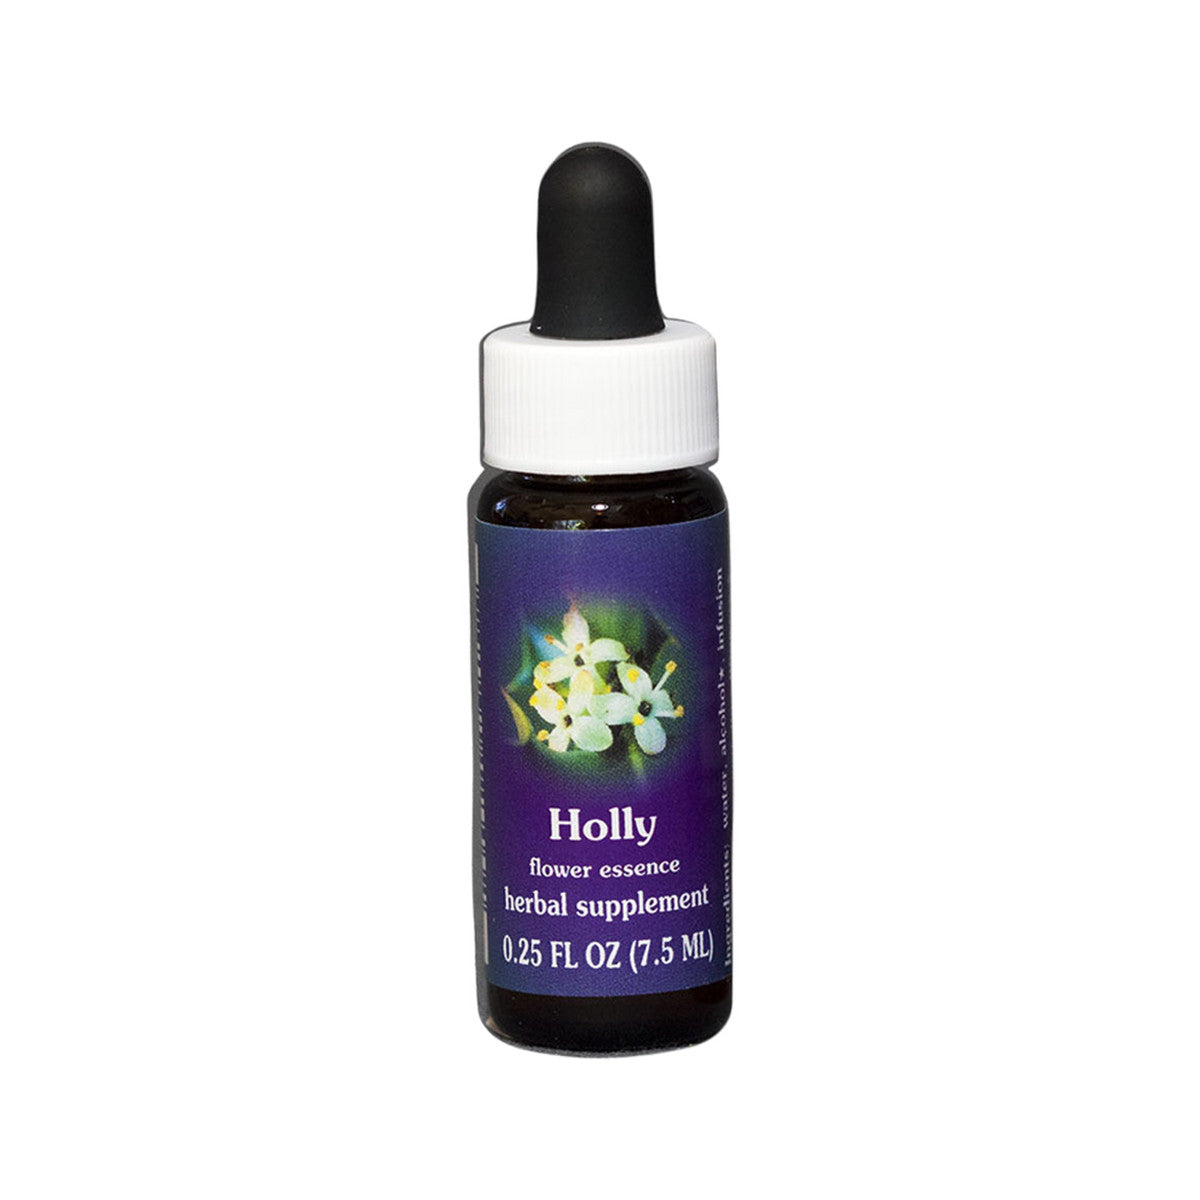 FES Organic Research Flower Essence Holly 7.5ml